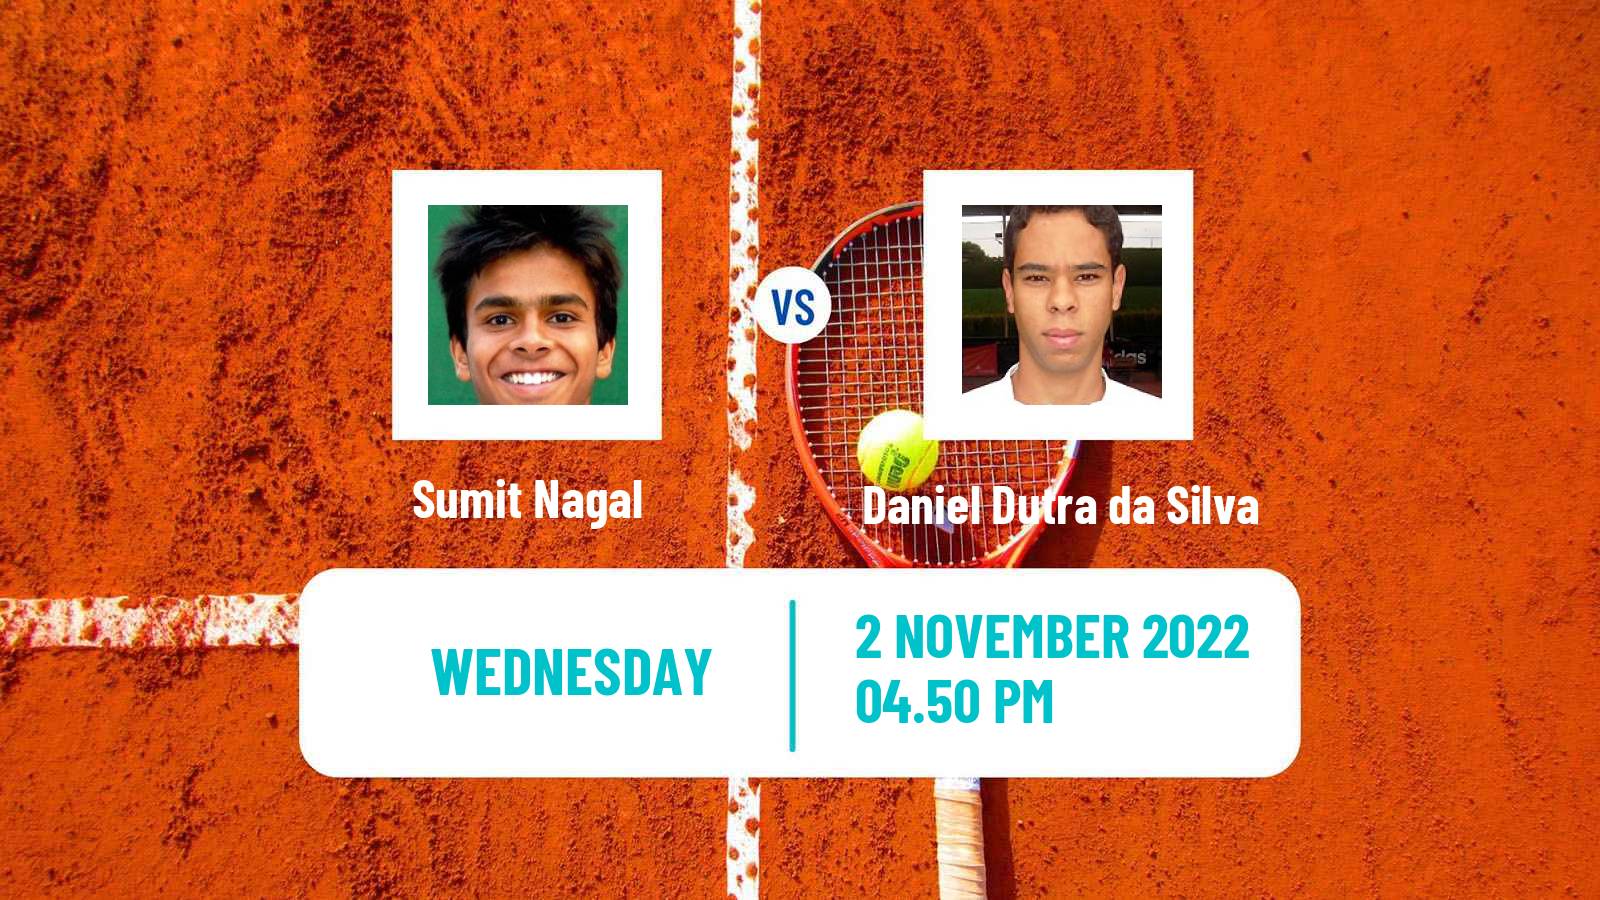 Tennis ATP Challenger Sumit Nagal - Daniel Dutra da Silva